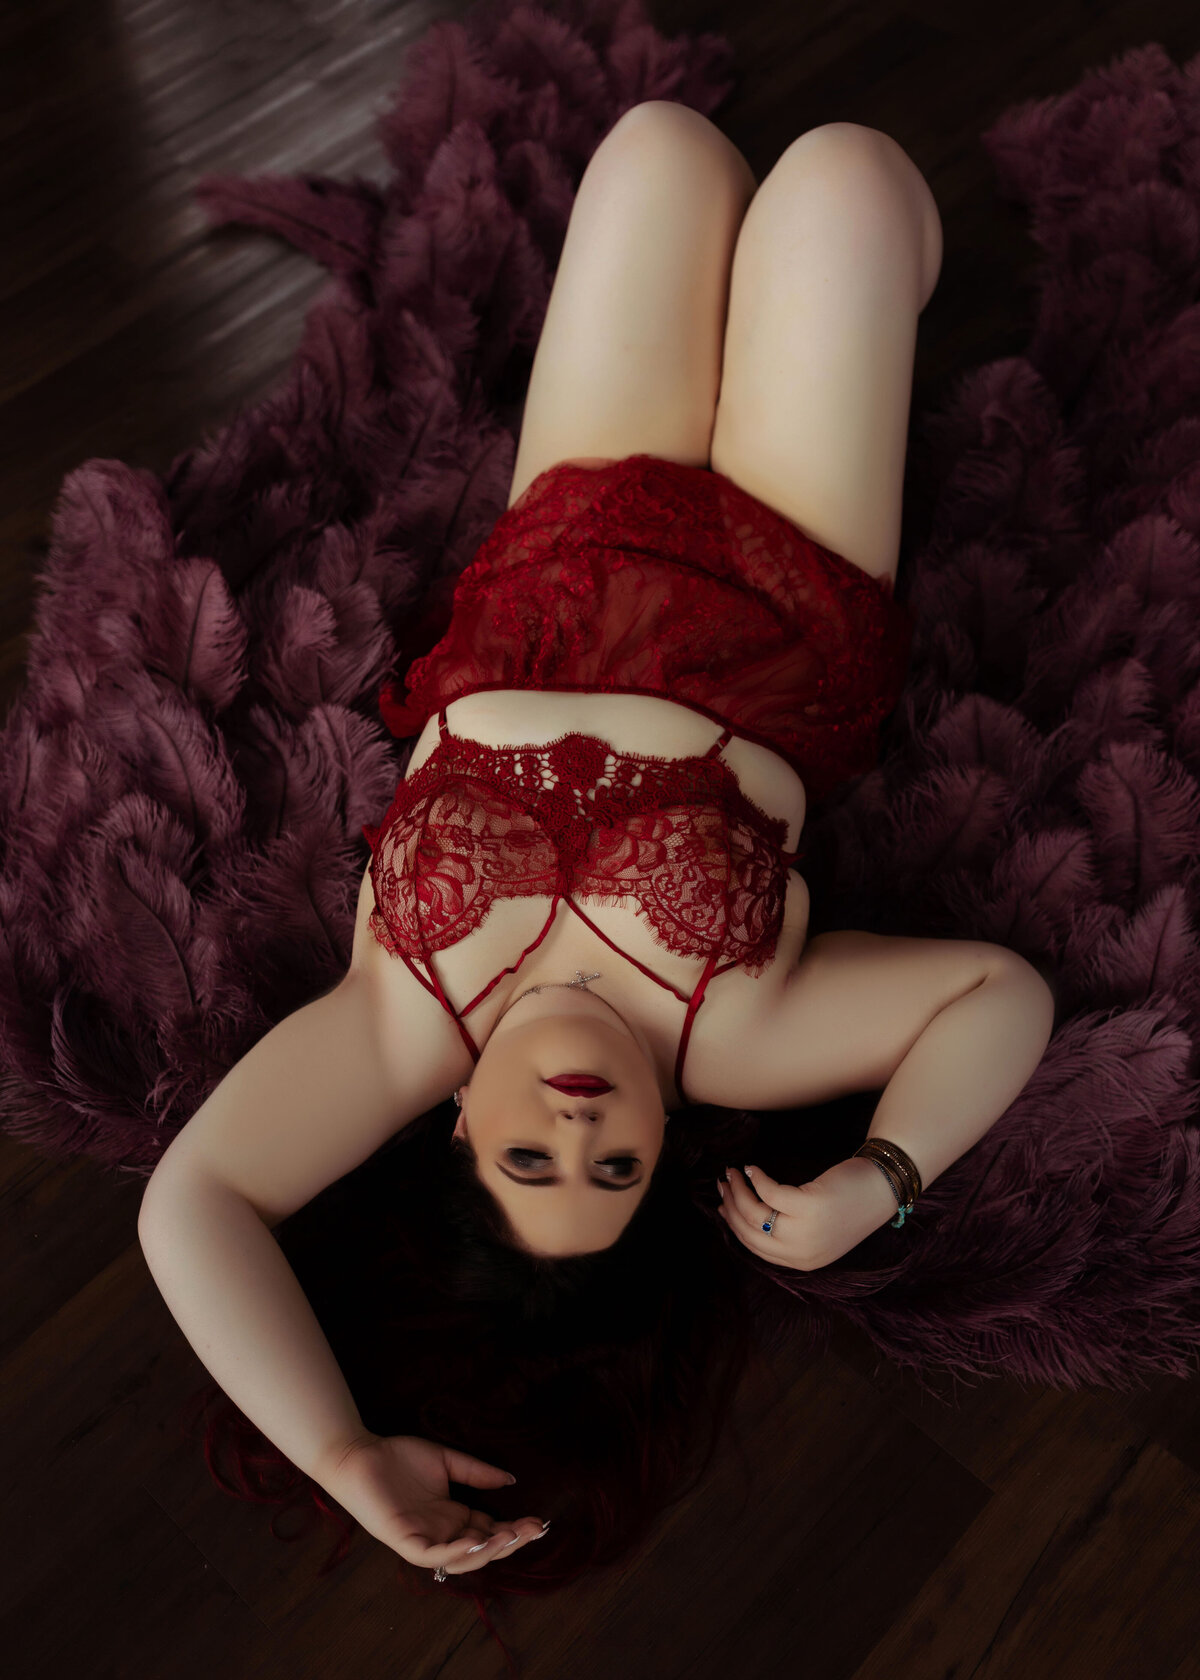 plus size boudoir woman wearing red lingerie and purple angel wings